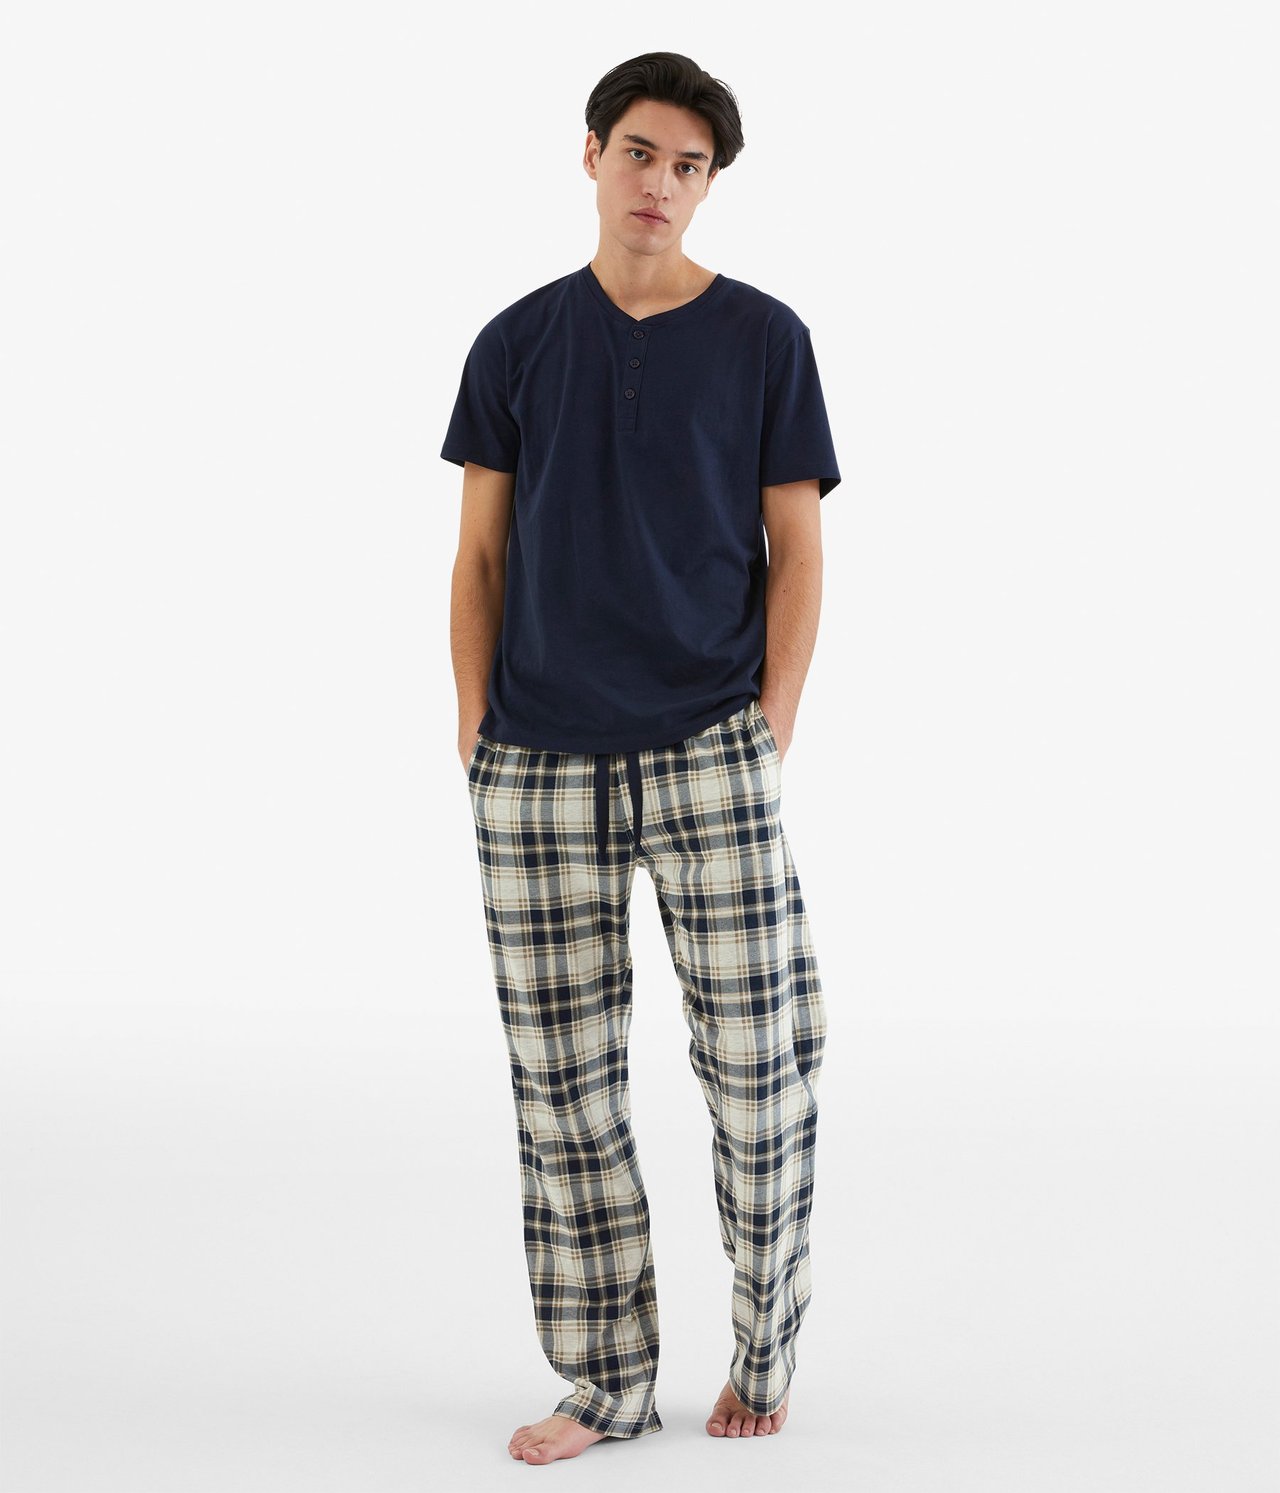 Pyjamasbukse - Mørkeblå - 189cm / Storlek: M - 1